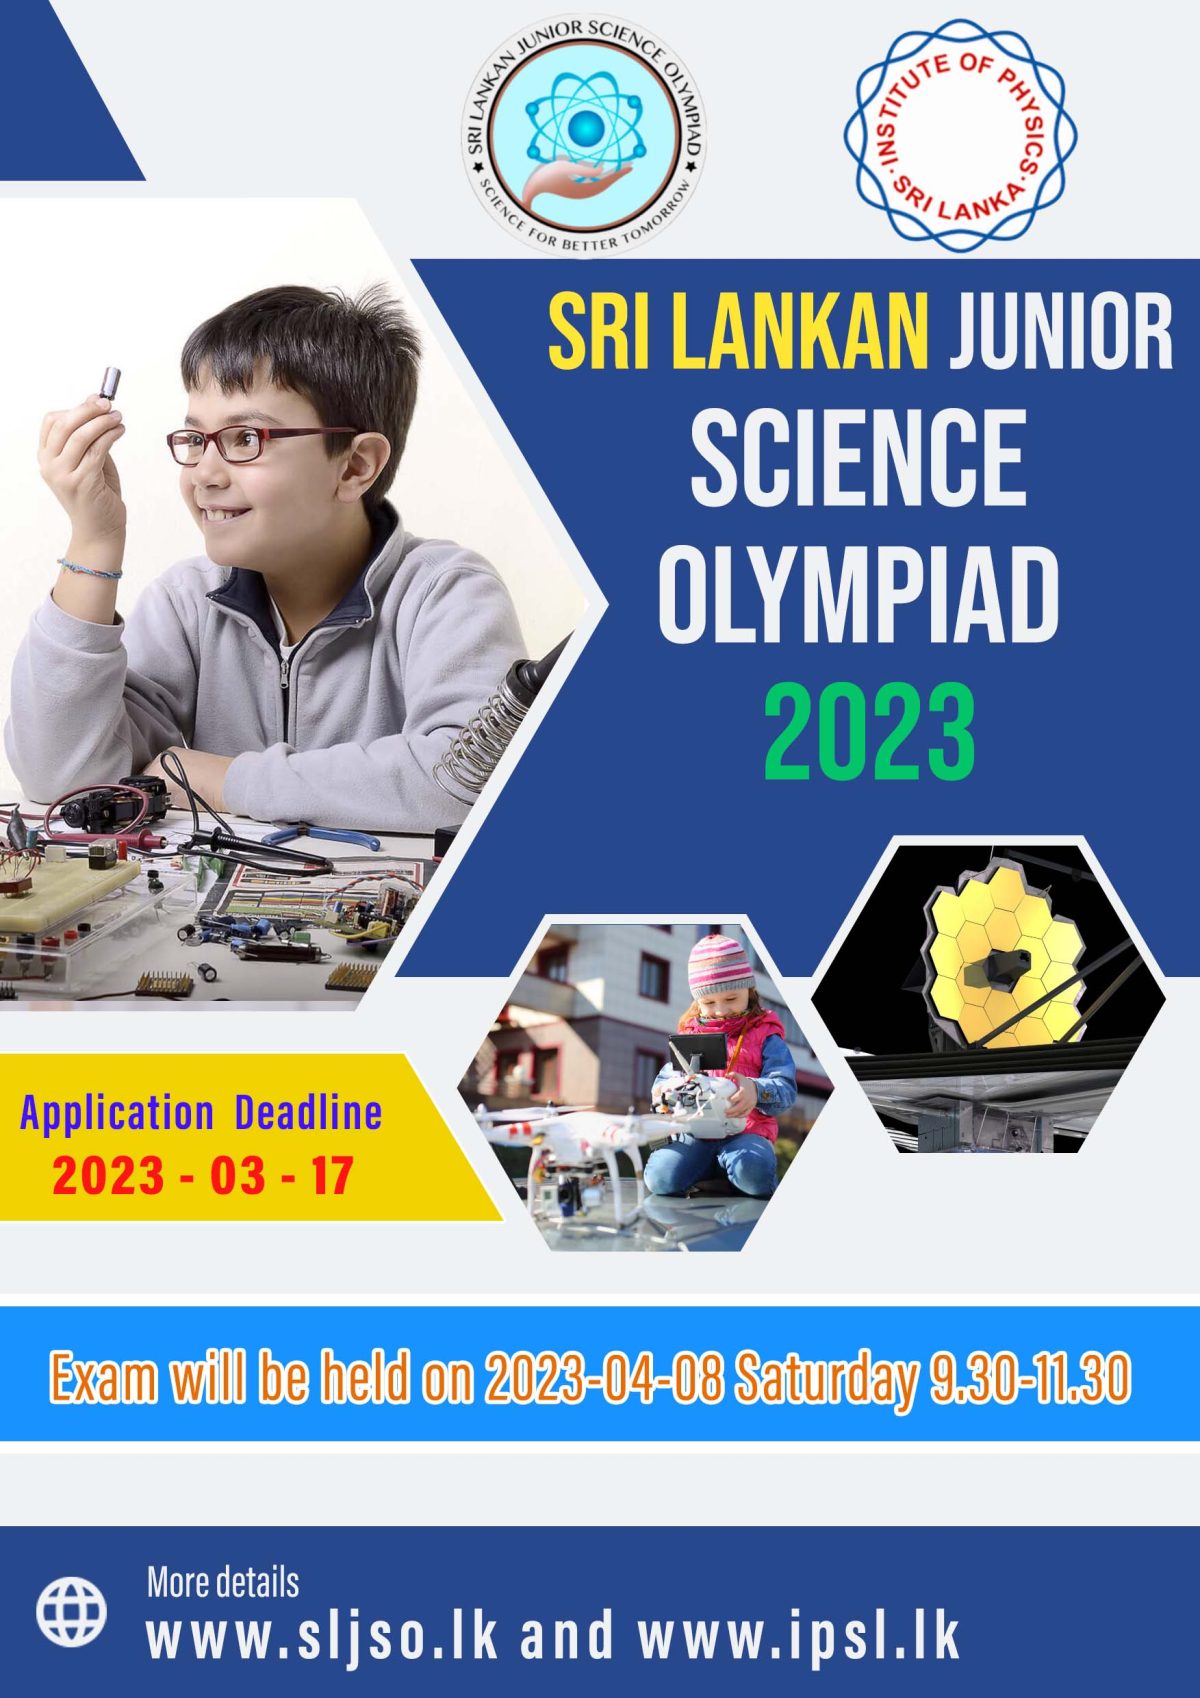 Junior Science Olympiad 2023 Institute of Physics Sri Lanka